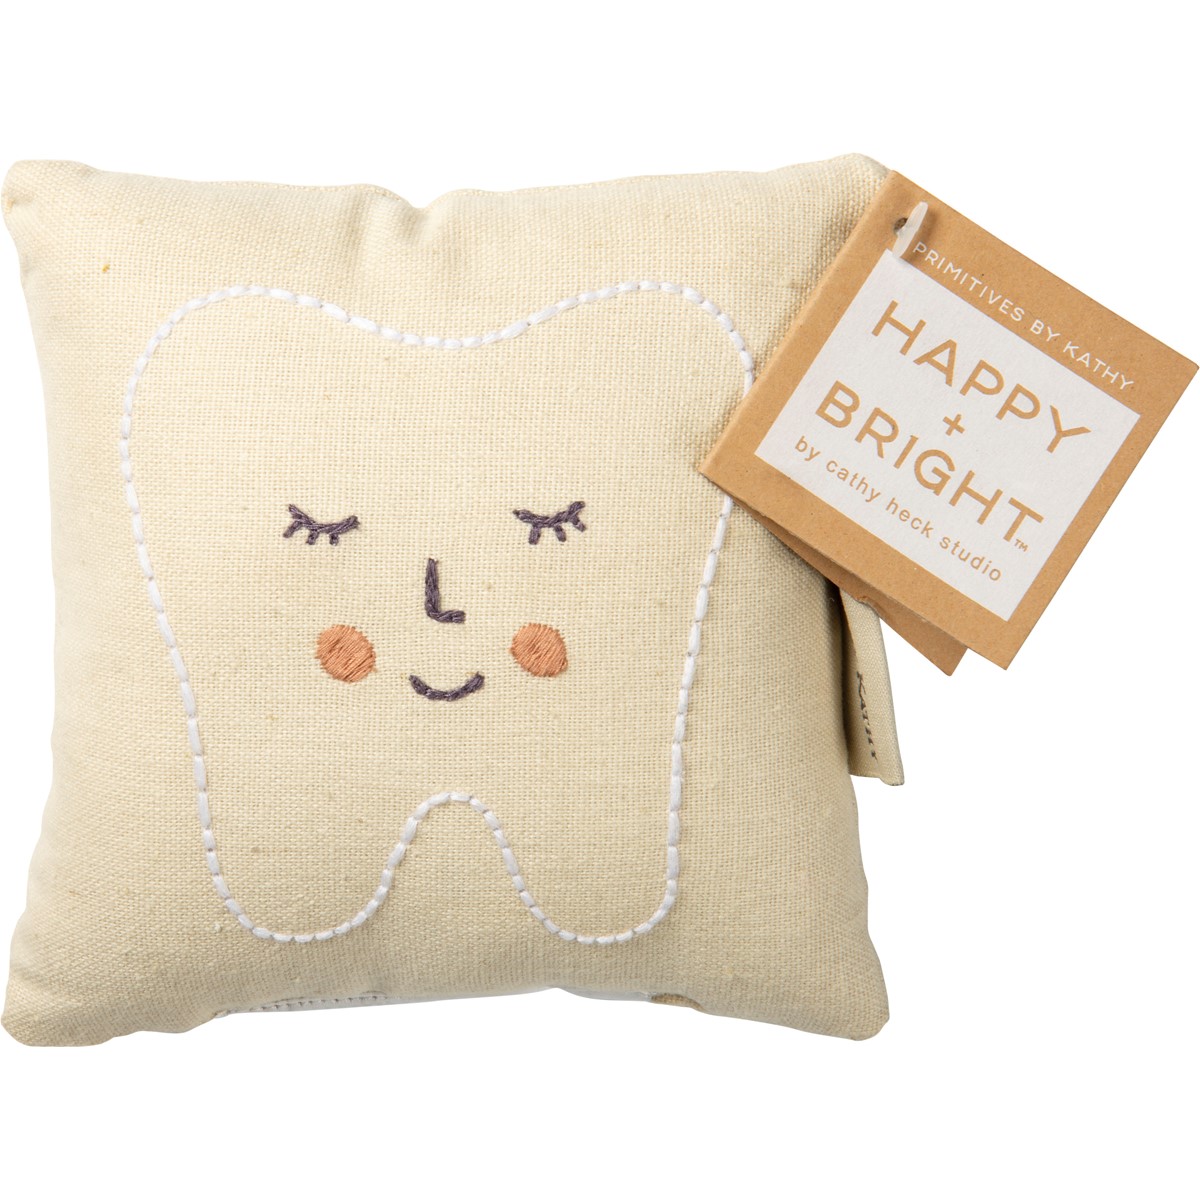 Pink Tooth Fairy Pillow - Cotton, Linen